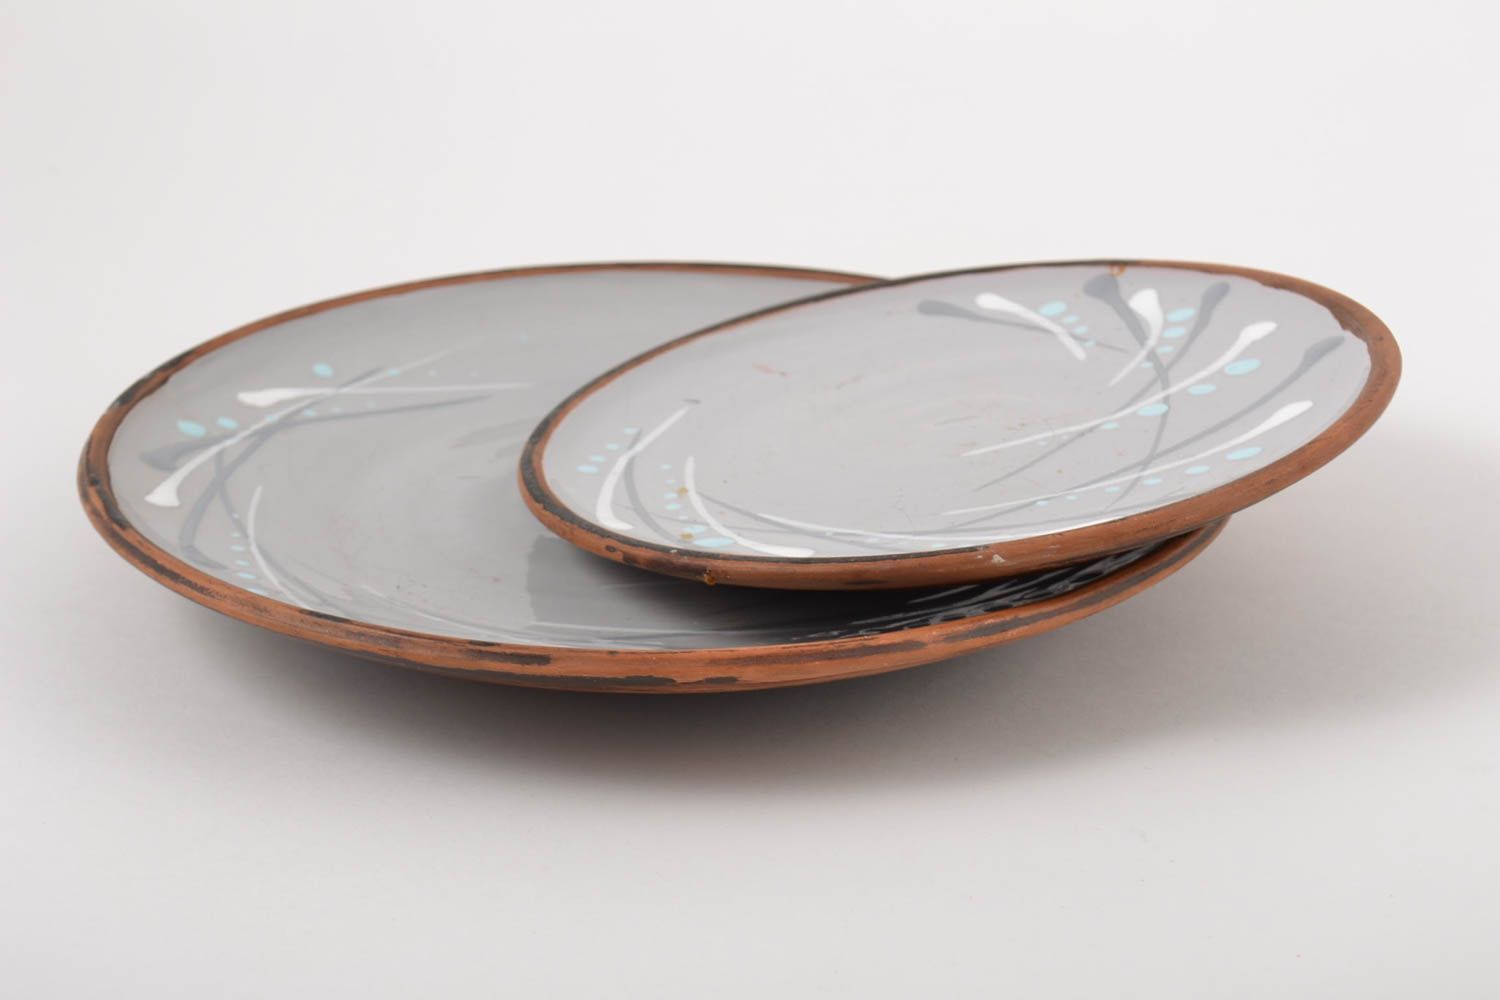 Handmade plates clay plates designer kitchenware handmade pottery unusual plates photo 2